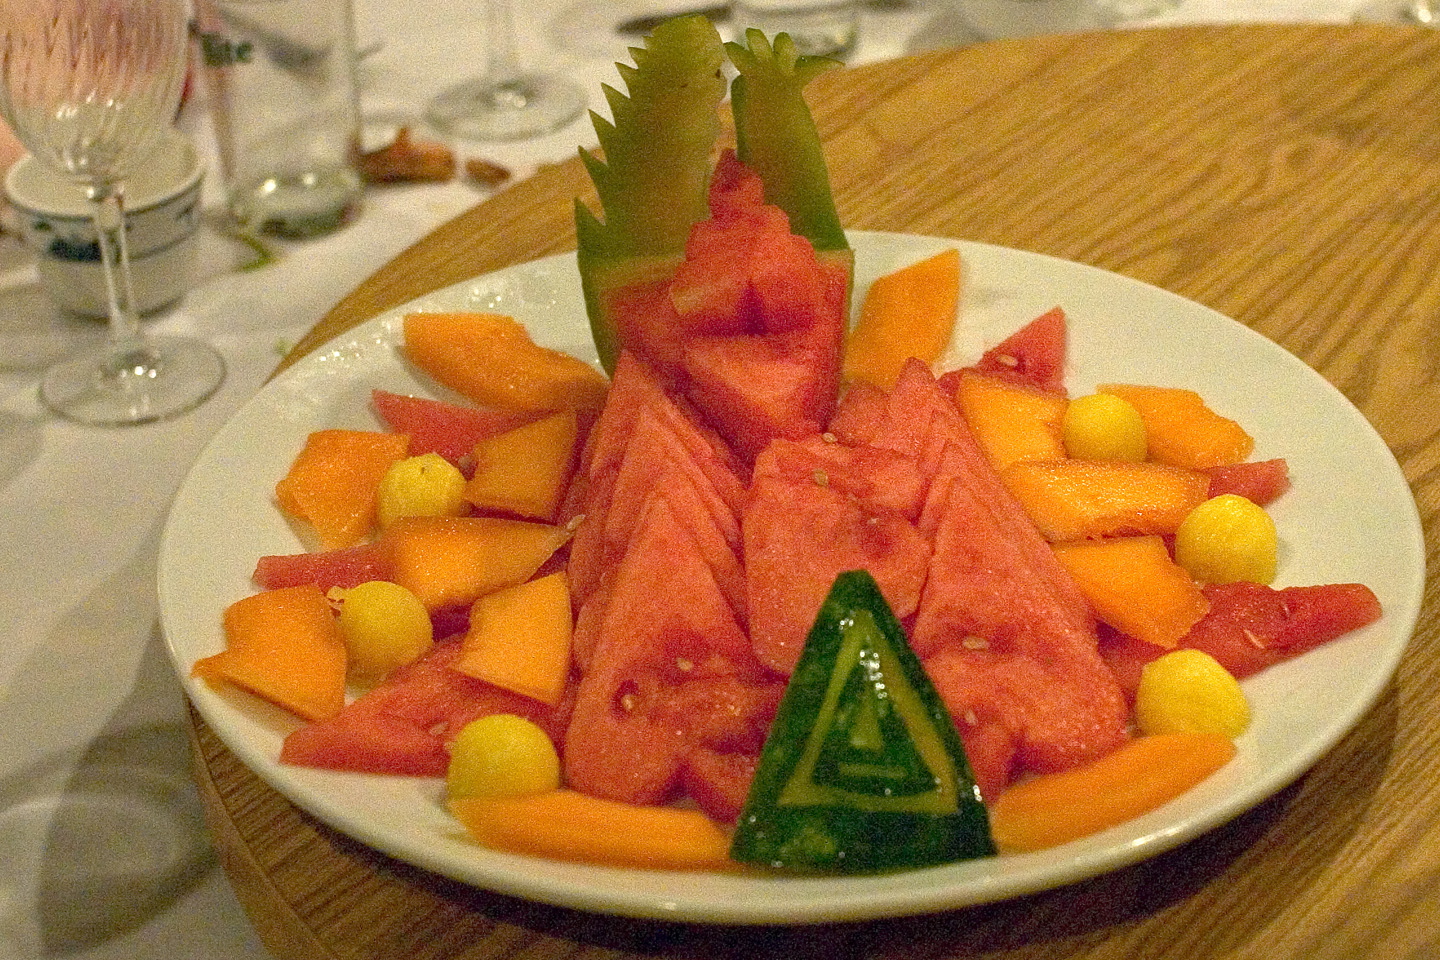 Fruit dessert platter with phoenix